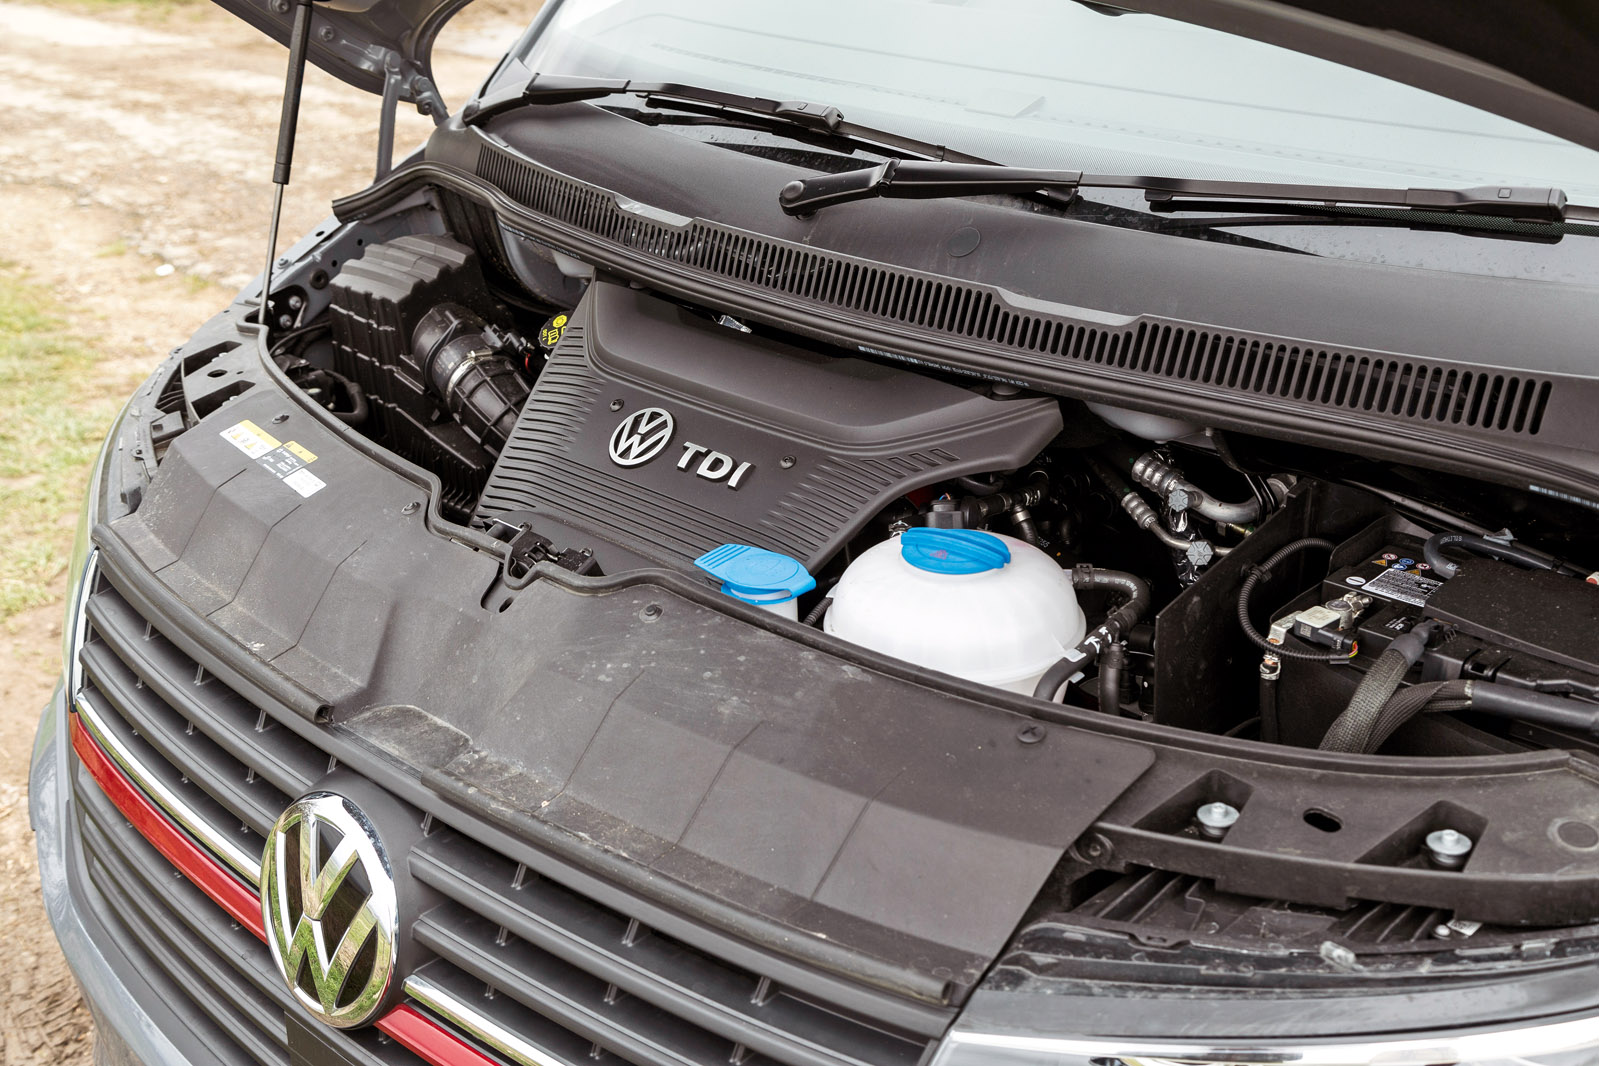 Volkswagen Transporter Driving, Engines & Performance